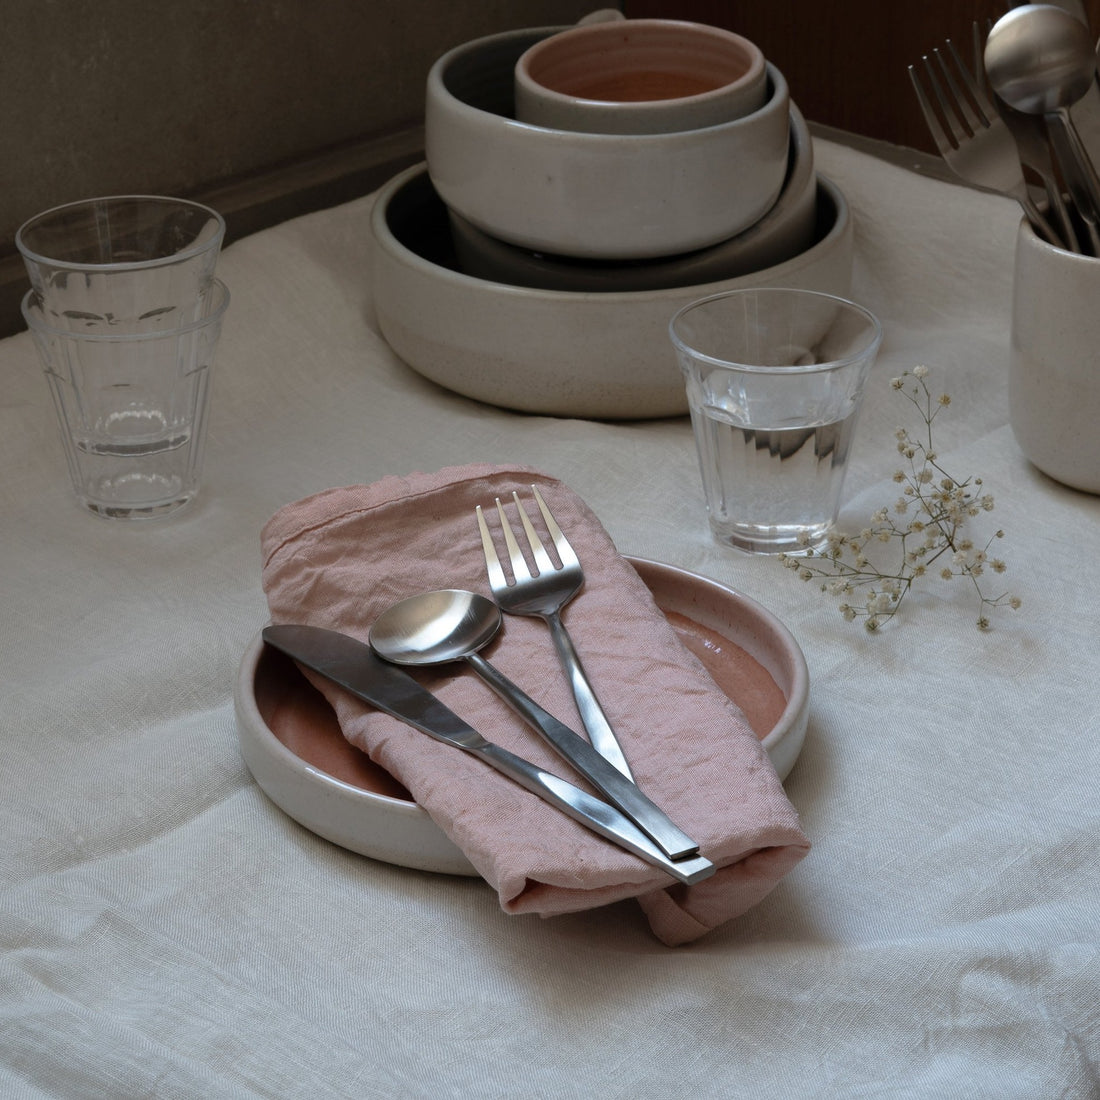 Wabi steel cutlery set by fleck with ceramic plates